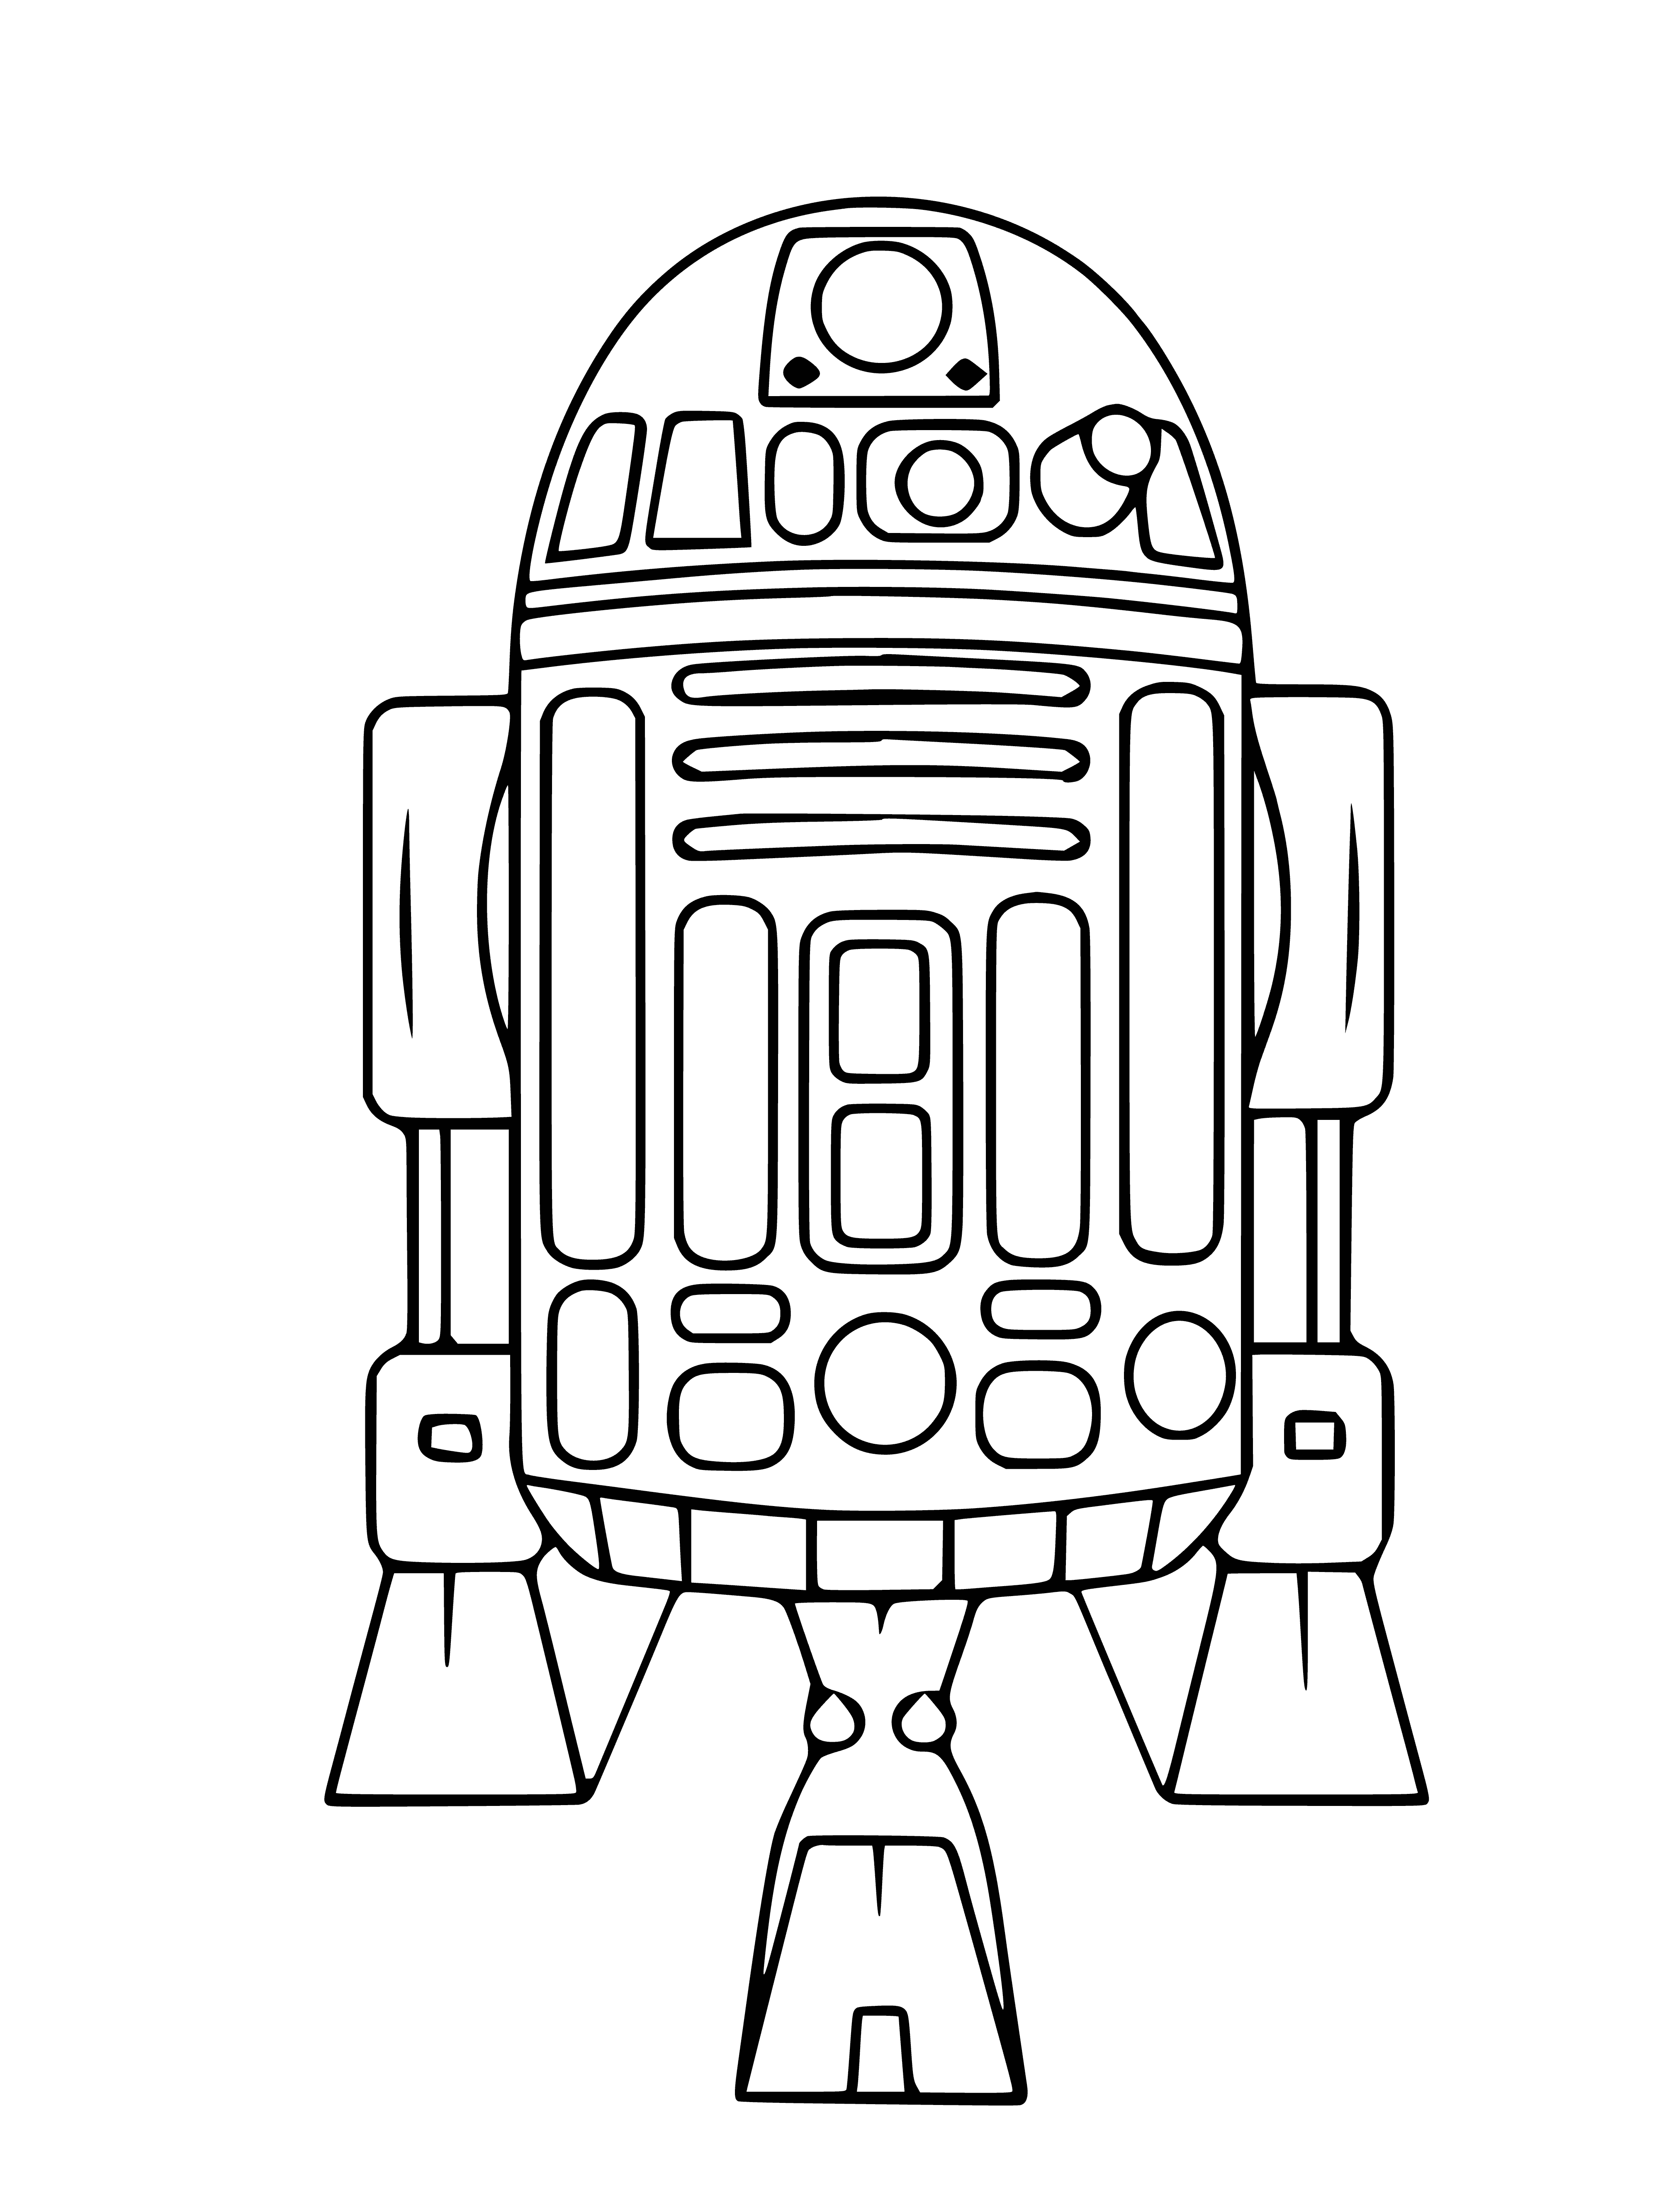 Astro-droïde R2-D2 coloriage